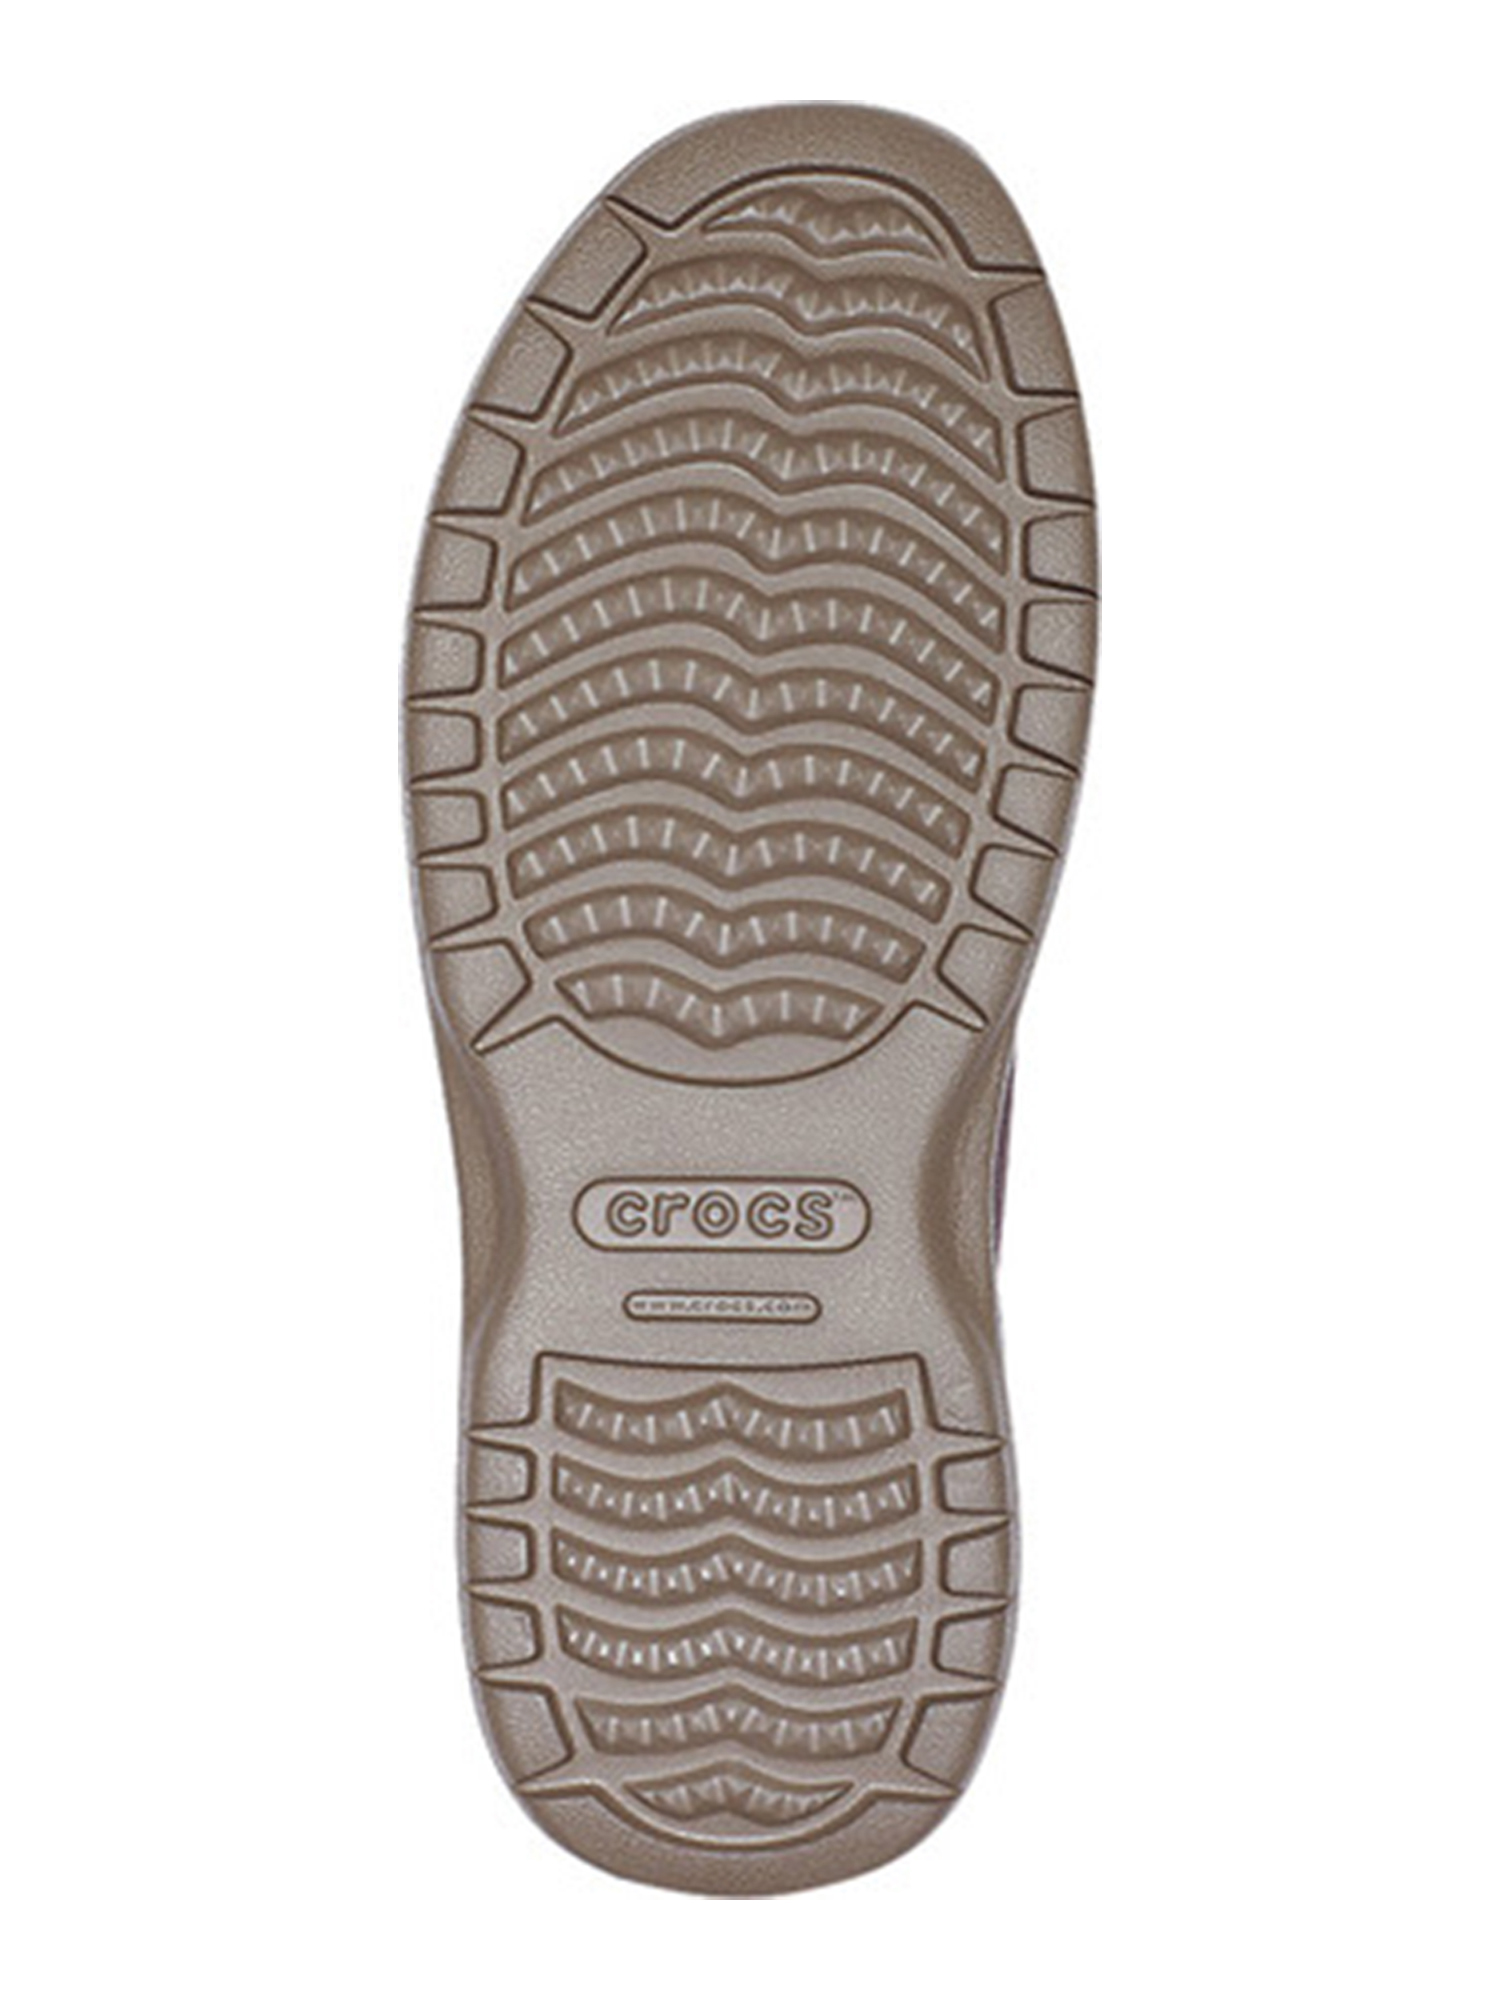 Crocs Men's Santa Cruz Convertible Slip On Loafer - image 5 of 5